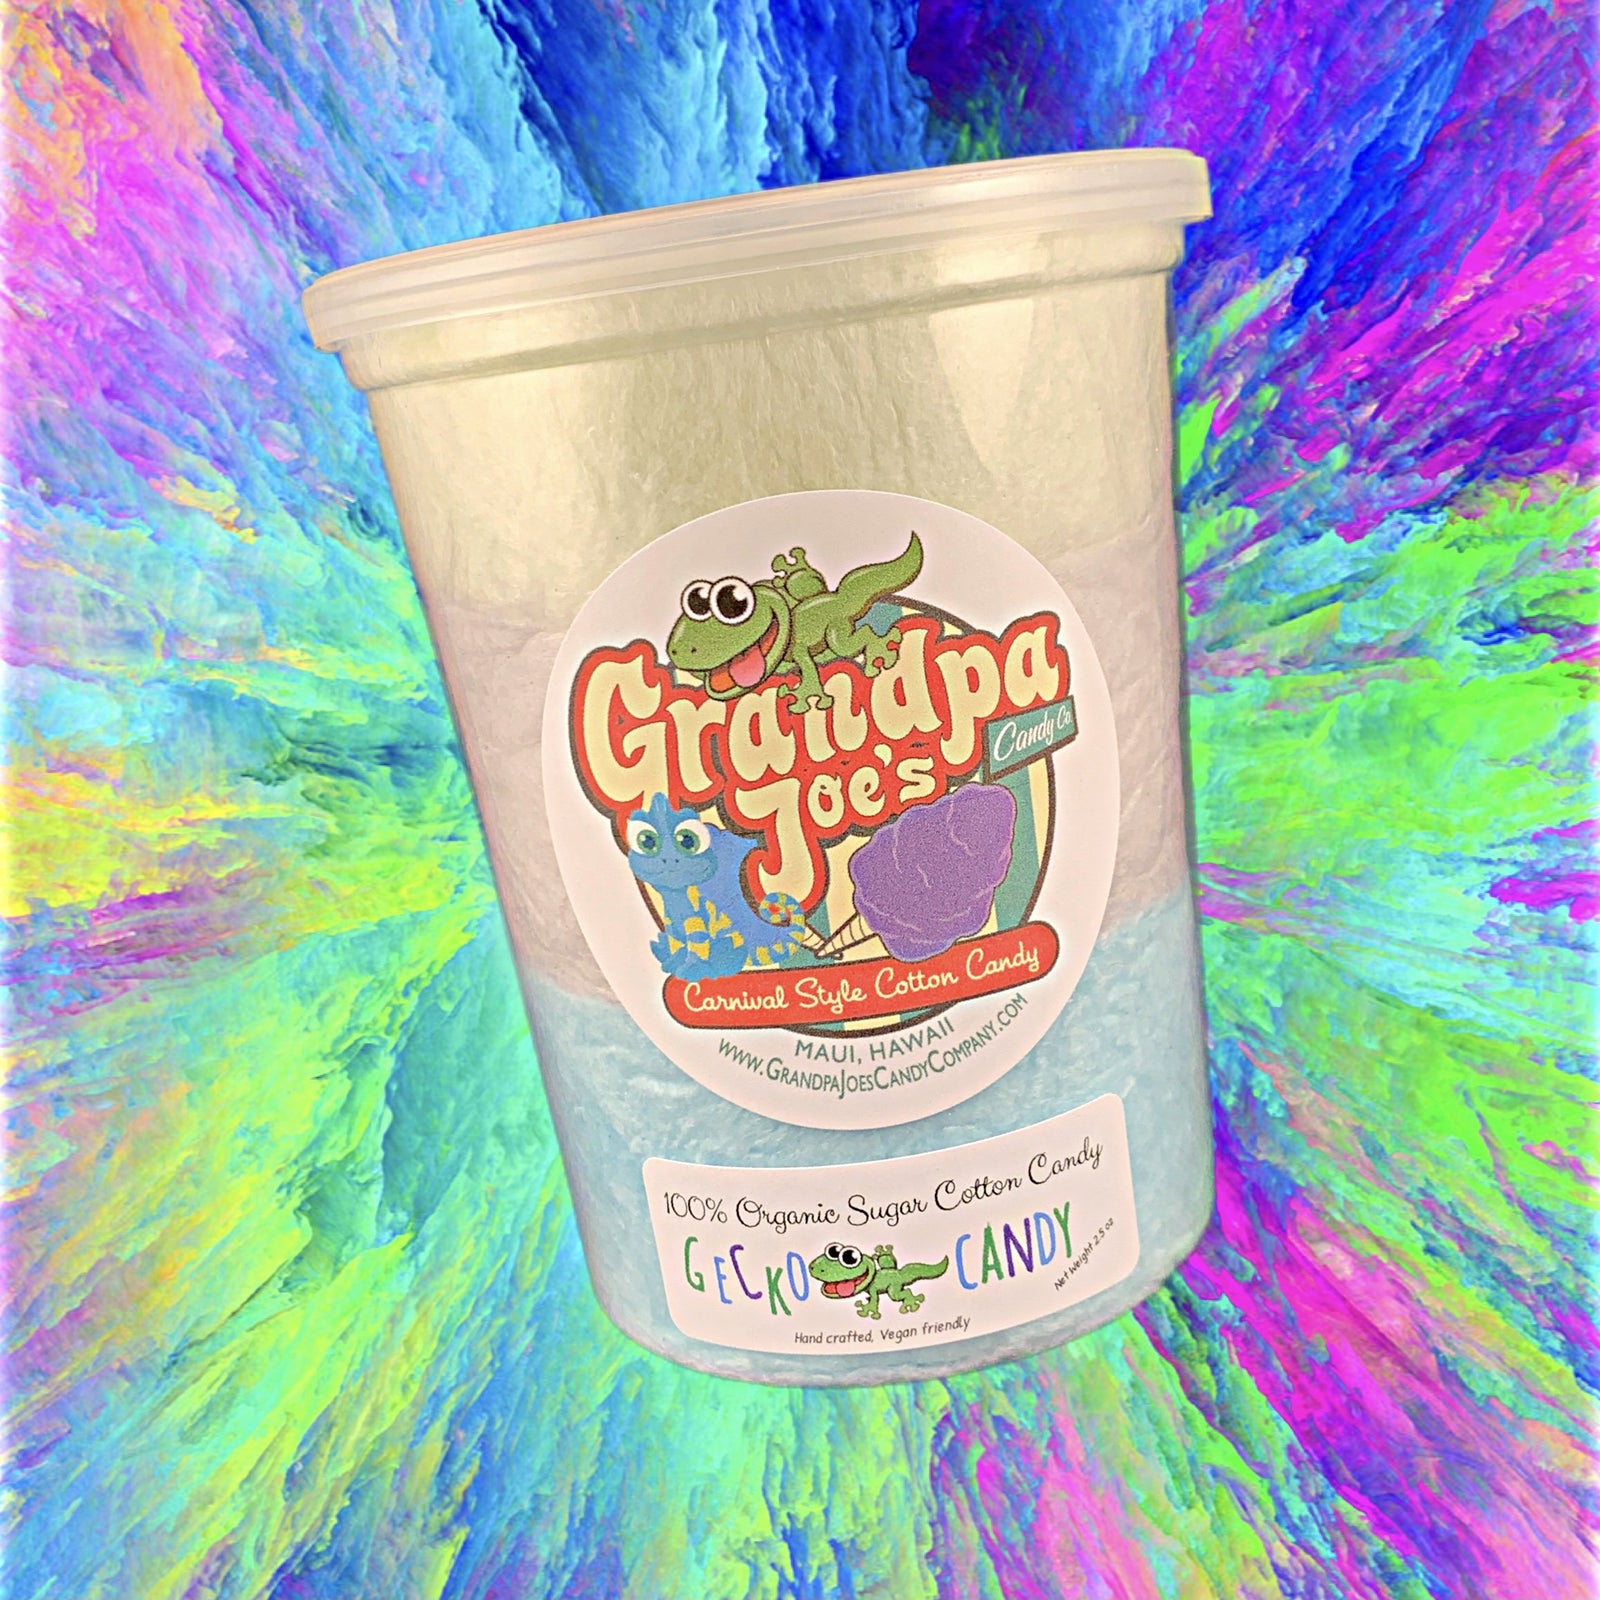 Pop-Up Mākeke - Grandpa Joe's Candy Company - Gecko 100% Organic Sugar Cotton Candy